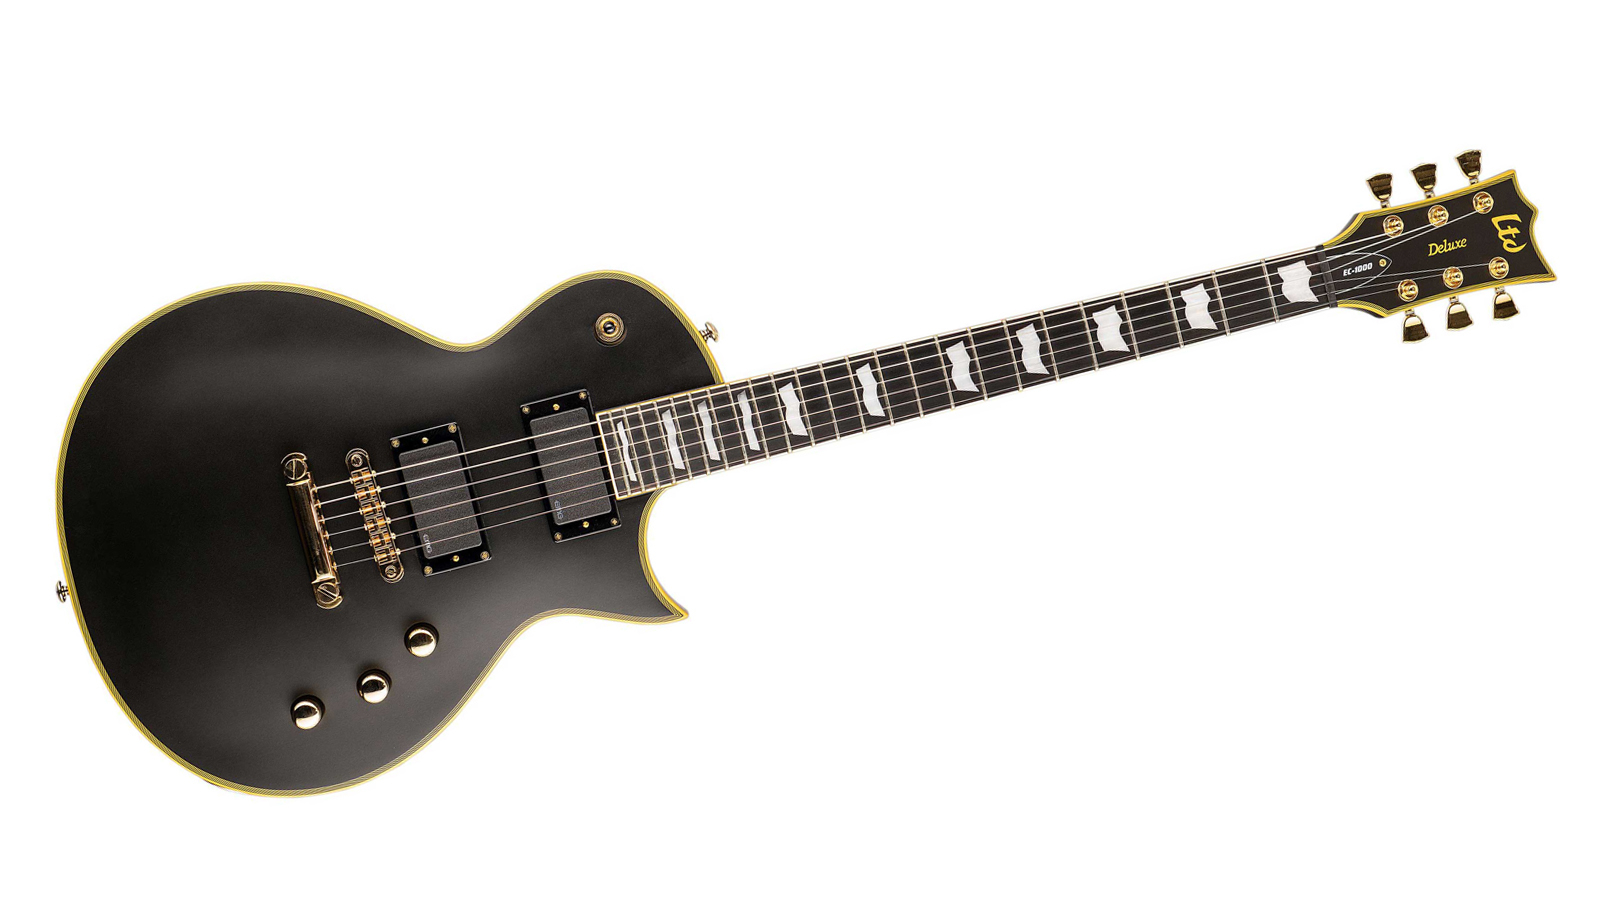 5 lighter alternatives to the Gibson Les Paul: ESP LTD EC1000